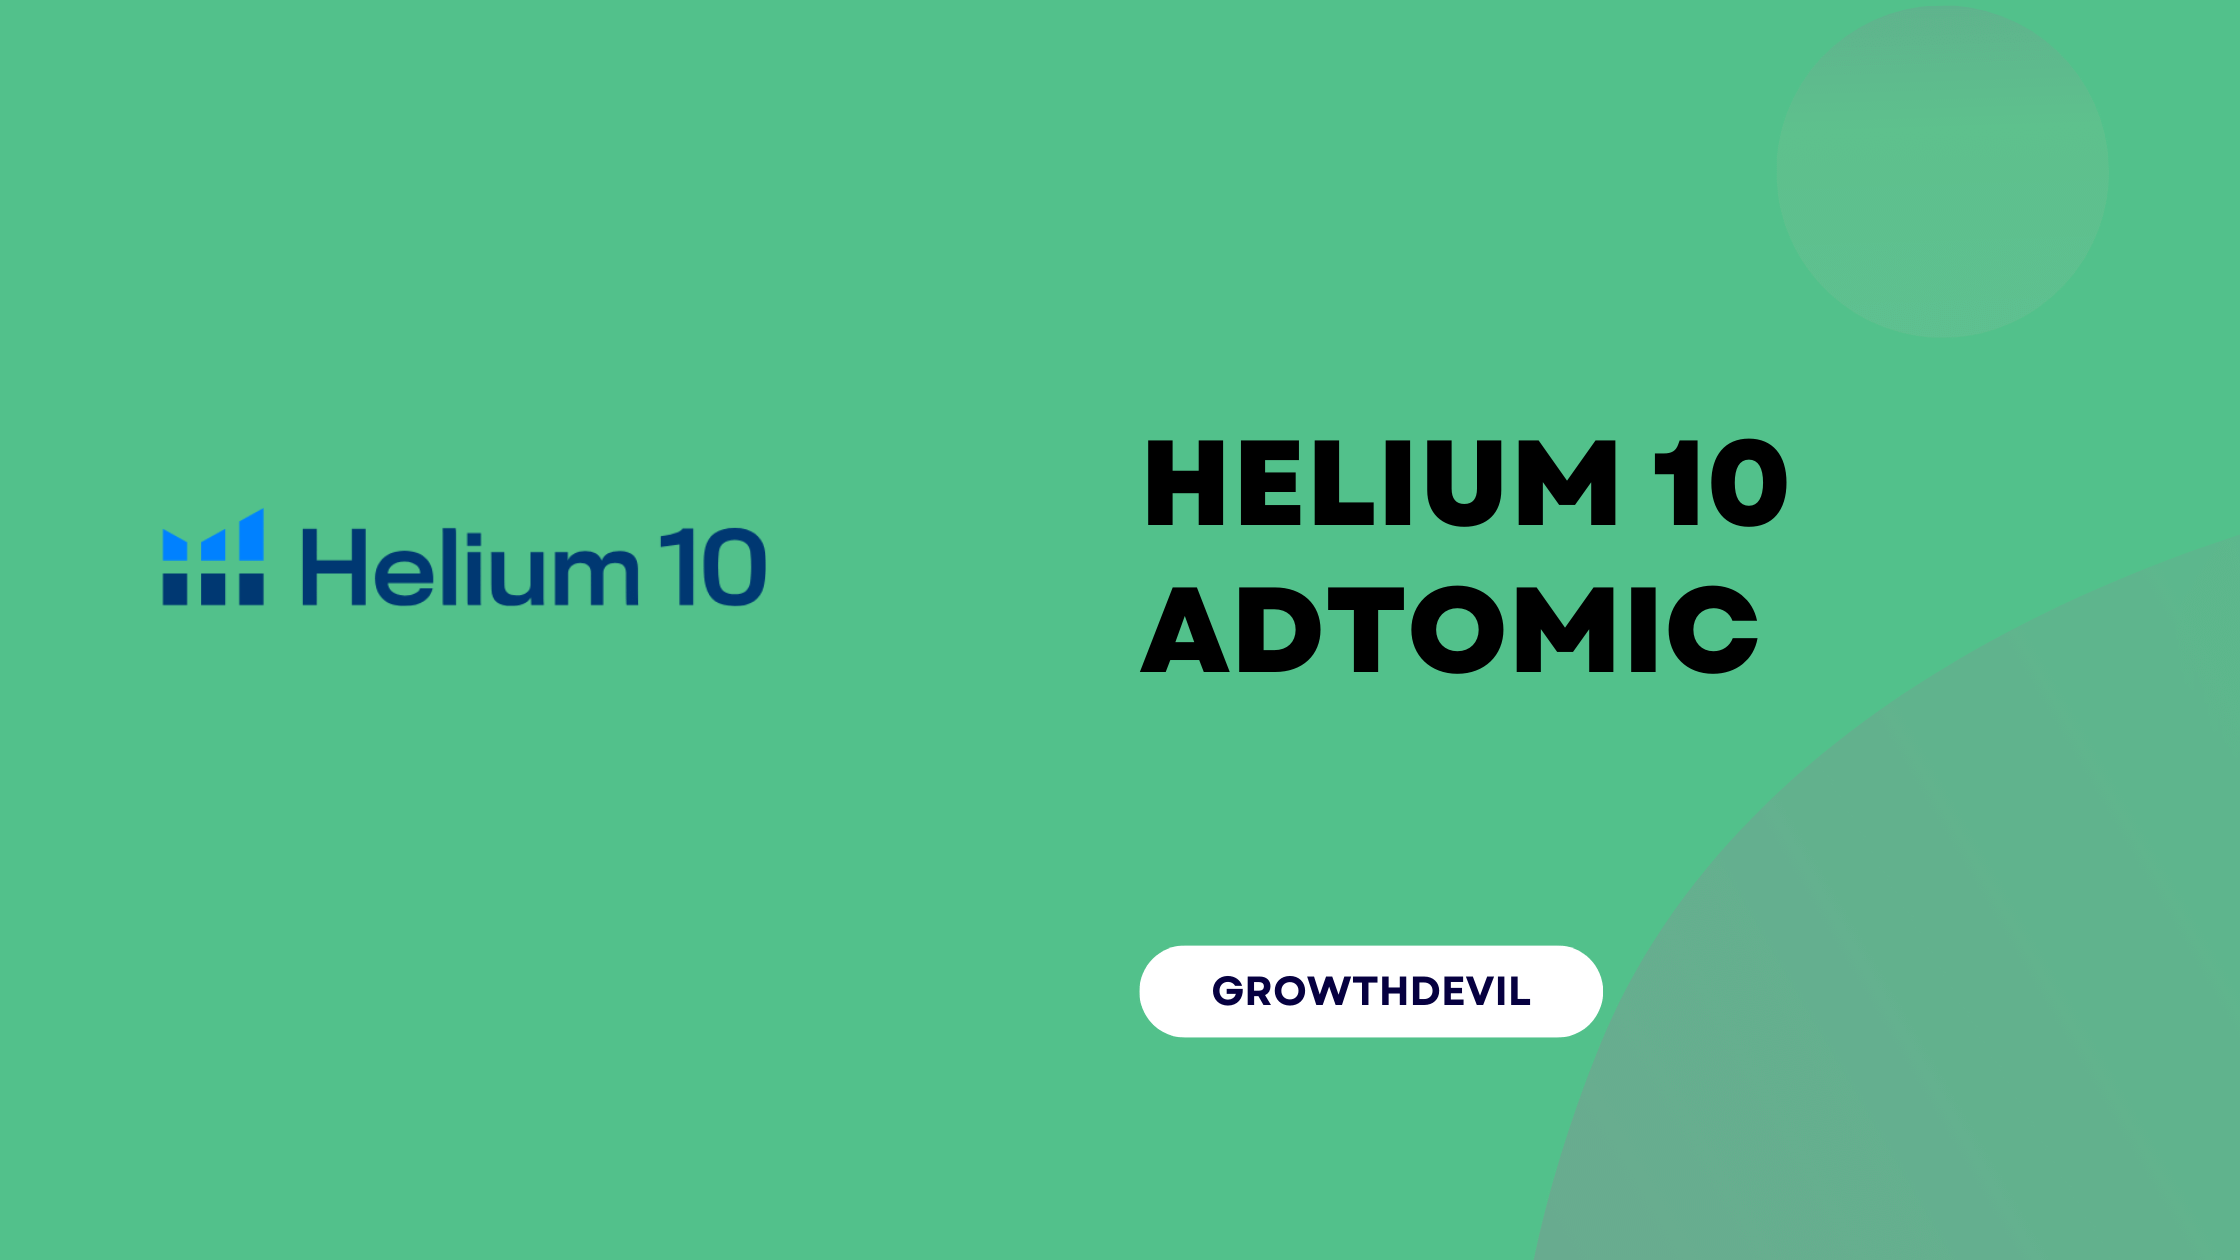 Helium 10 Adtomic - GrowthDevil